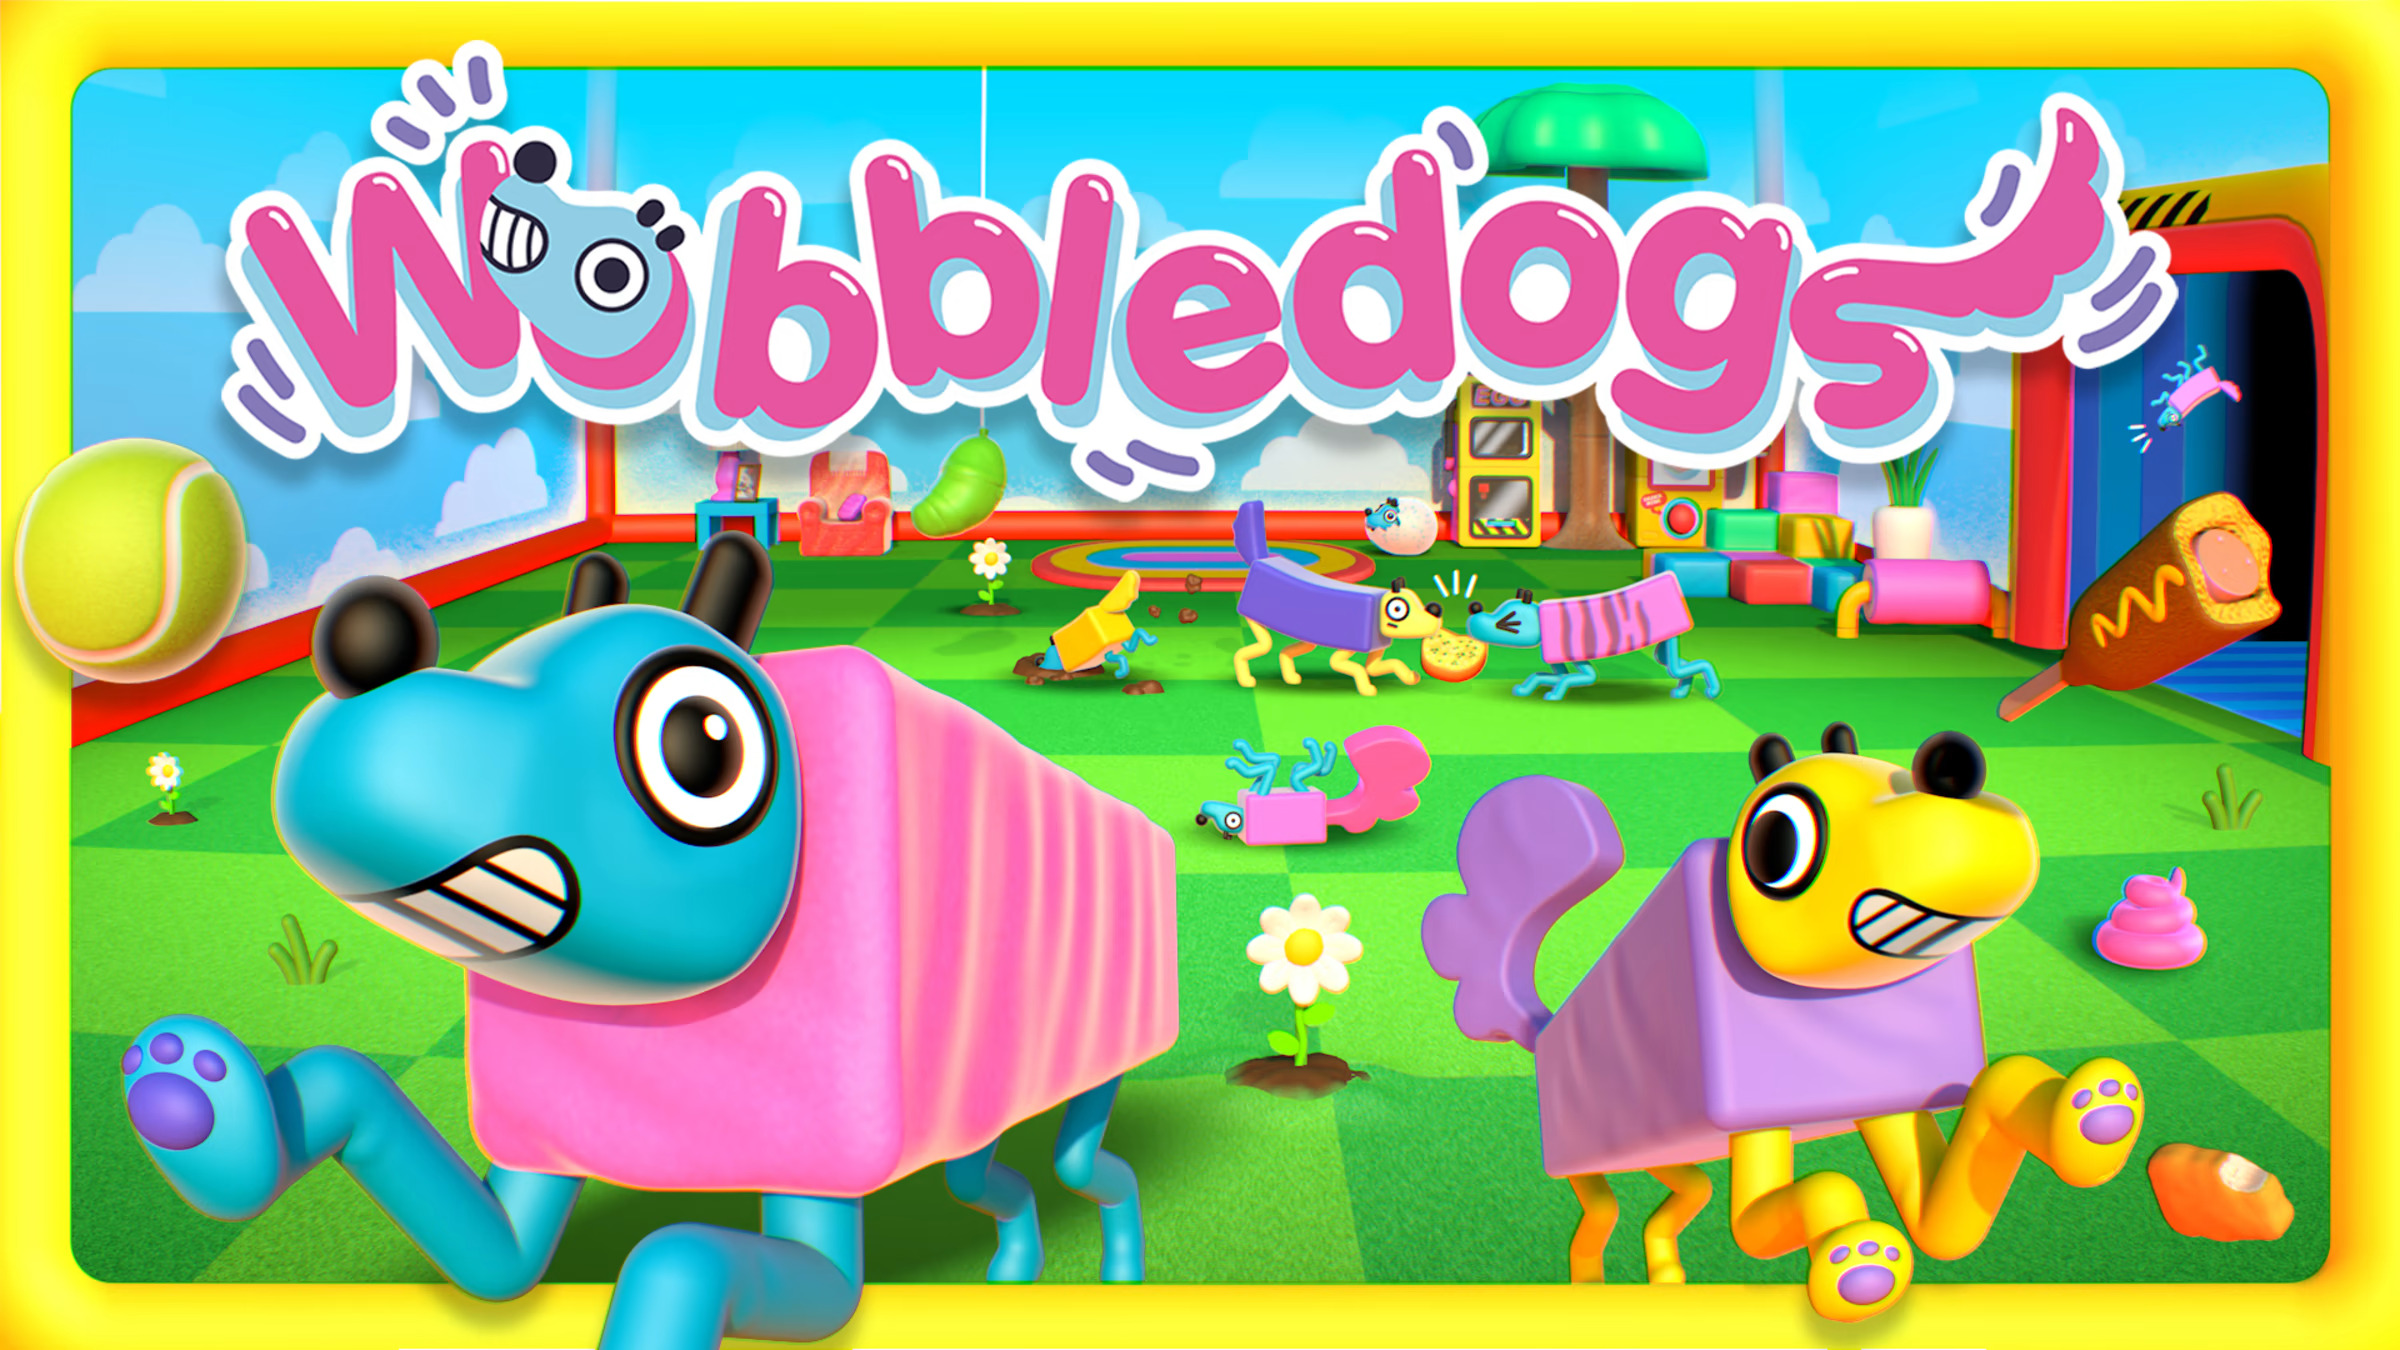 Wobbledogs доберется 23 мая до Xbox, после успешного запуска в Steam и на Switch: с сайта NEWXBOXONE.RU